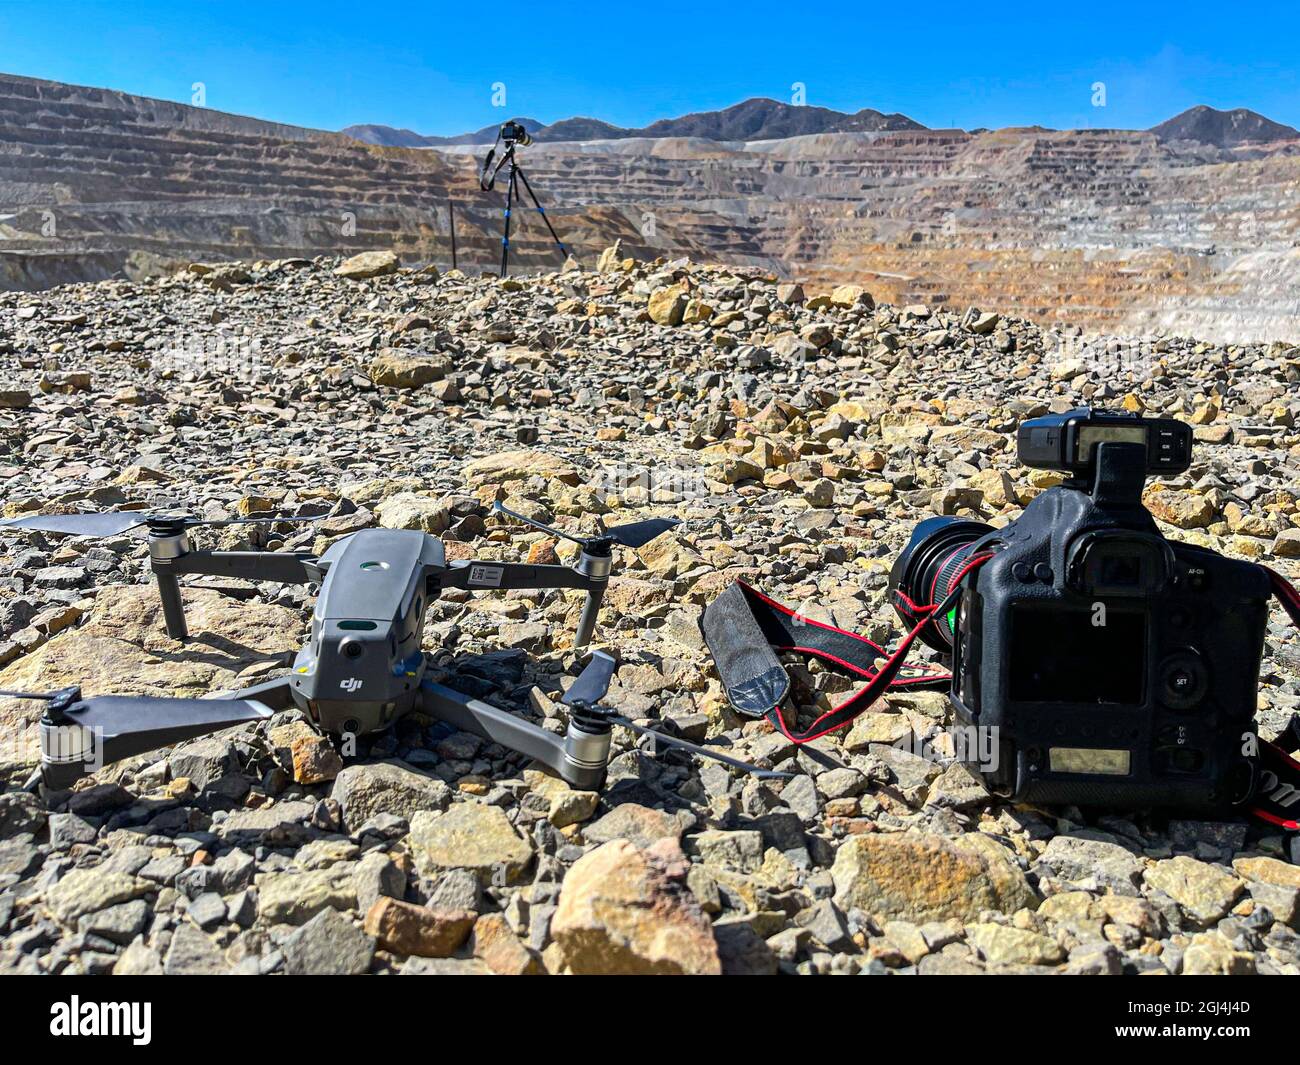 DJI Mavic Pro 2 drone, Canon 1 Dx Mark II camera with Godox Flash radio  trigger on stones or rocks on the ground. Drone de DJI Mavic Pro 2, Camara  Ca Stock Photo - Alamy